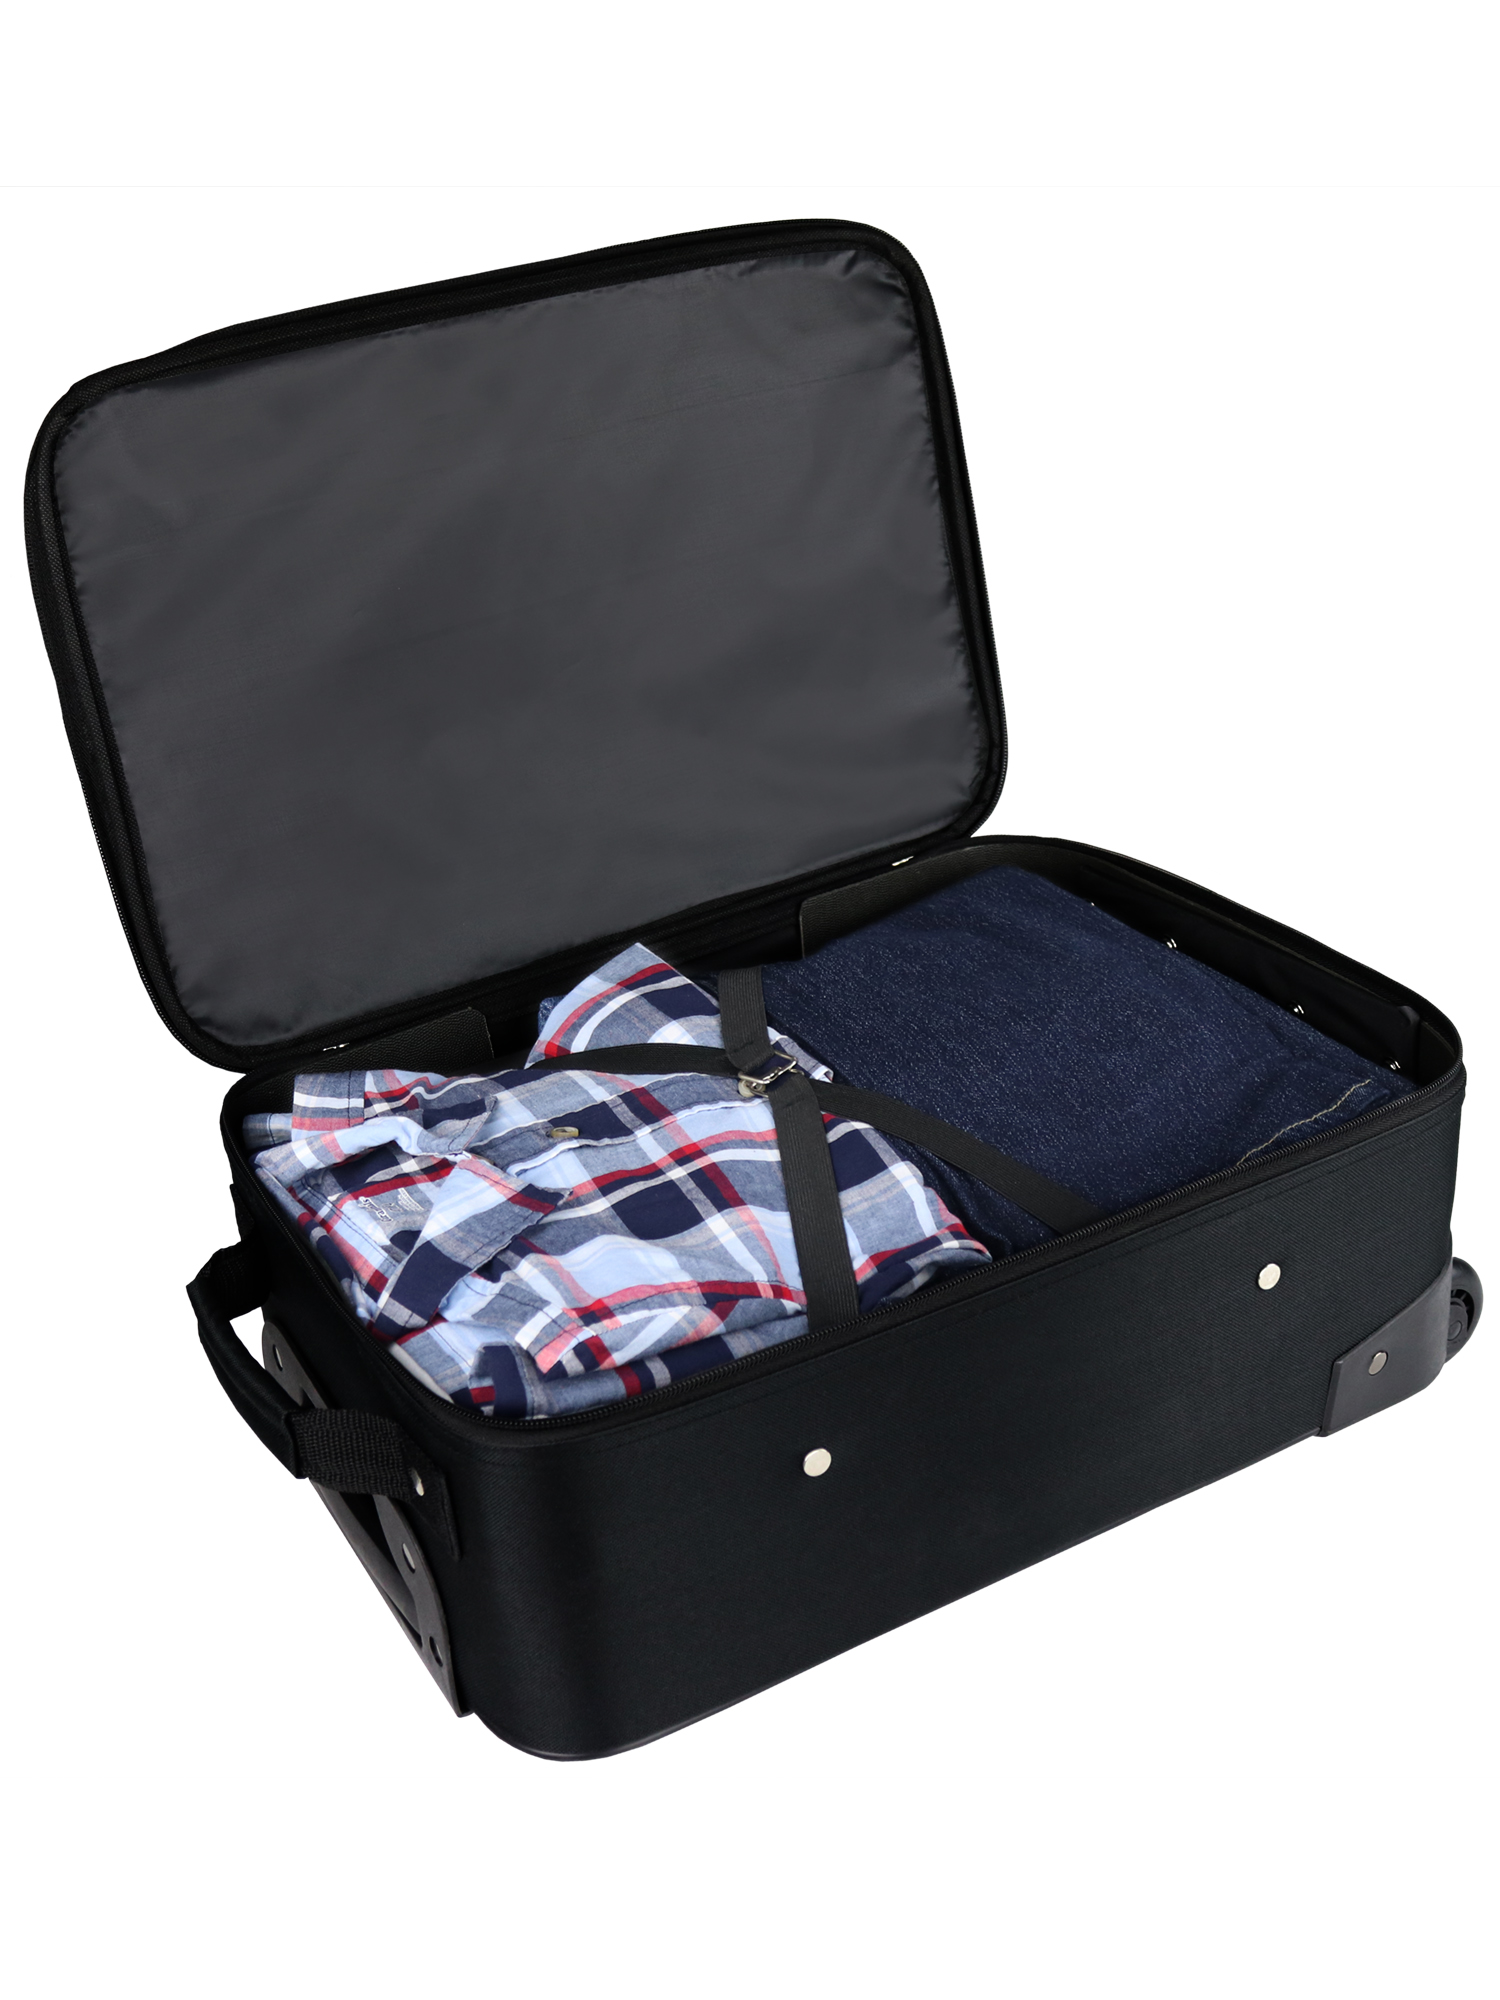 Protege Pilot Case 18" Softside Carry-on Luggage, Black - image 2 of 10